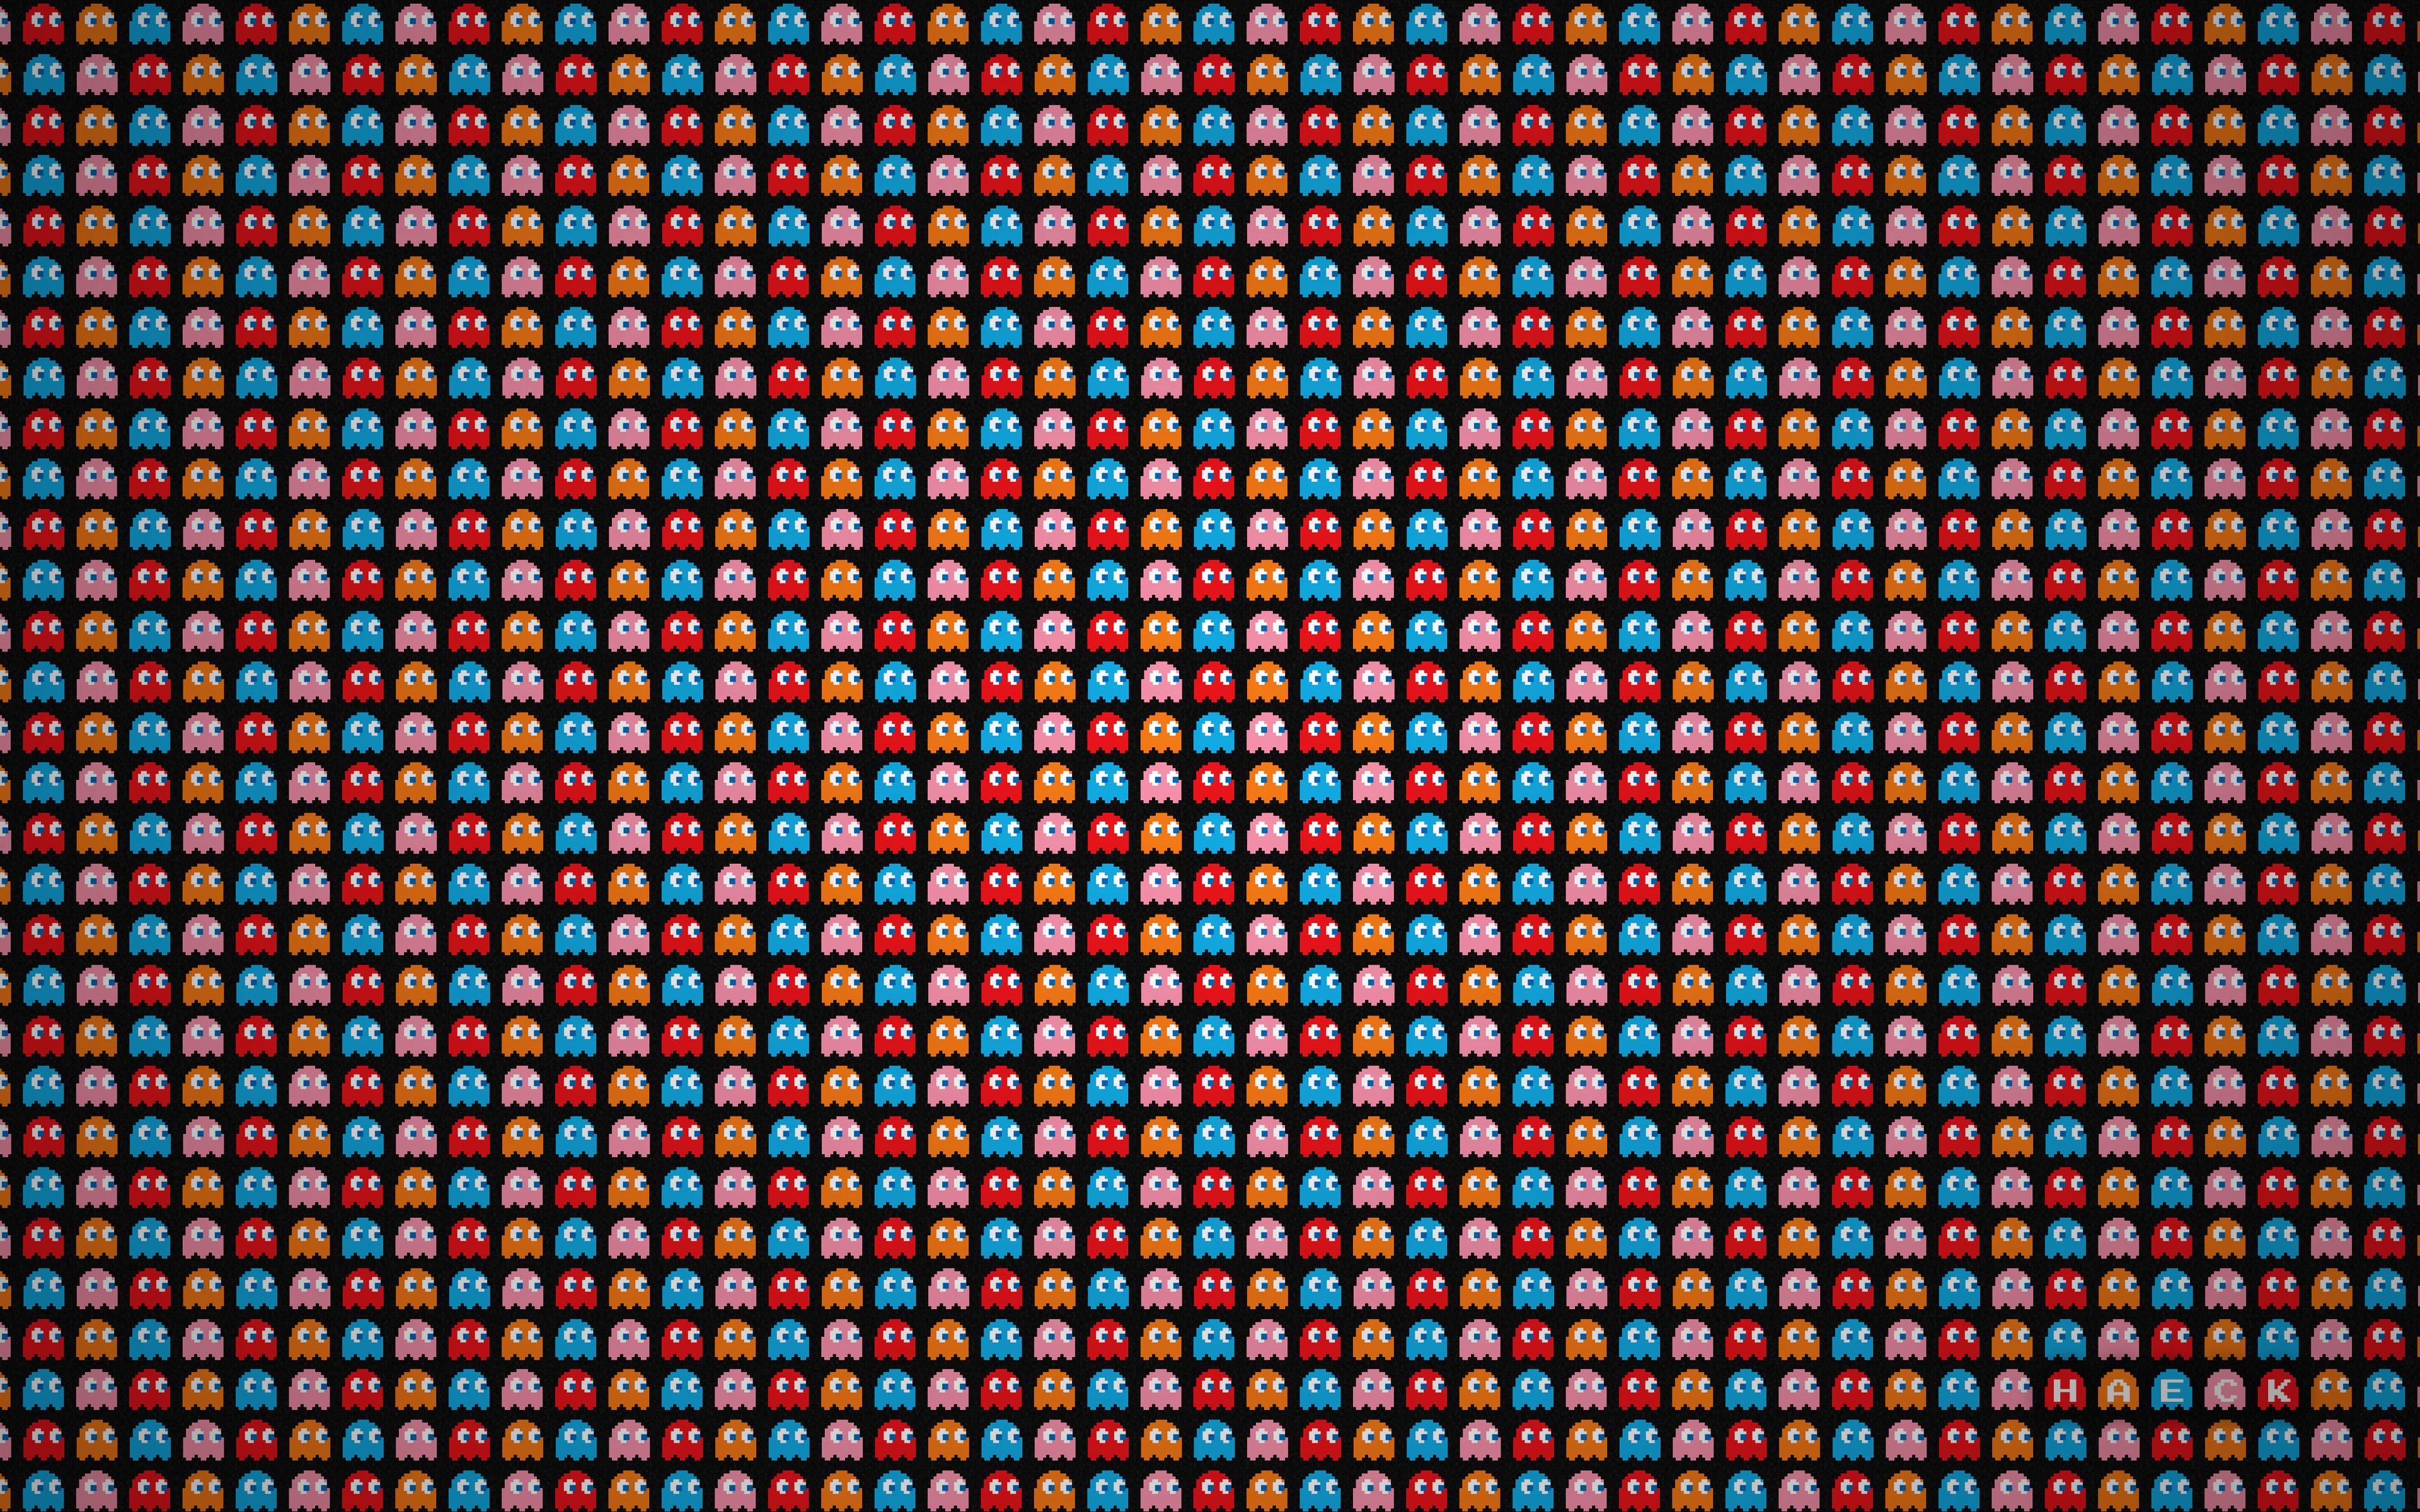 General 3840x2400 minimalism digital art Pac-Man  video games pixel art pixels pattern video game art retro games ghost